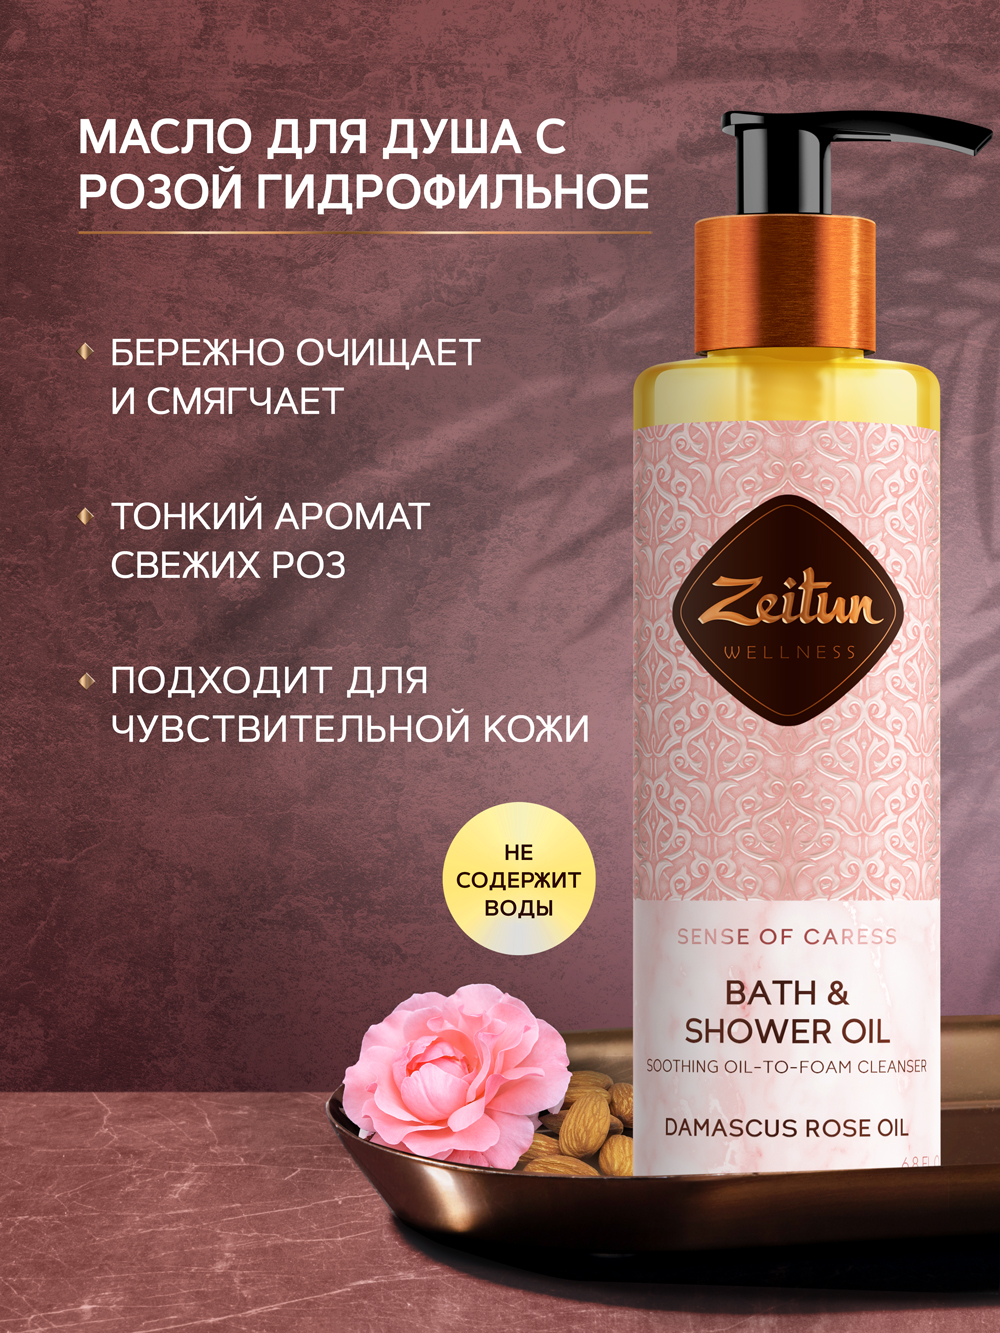 Масло для душа Zeitun Ritual of Caress Bath & Shower Oil смягчающее, 200 мл масло для душа zeitun ritual of caress bath